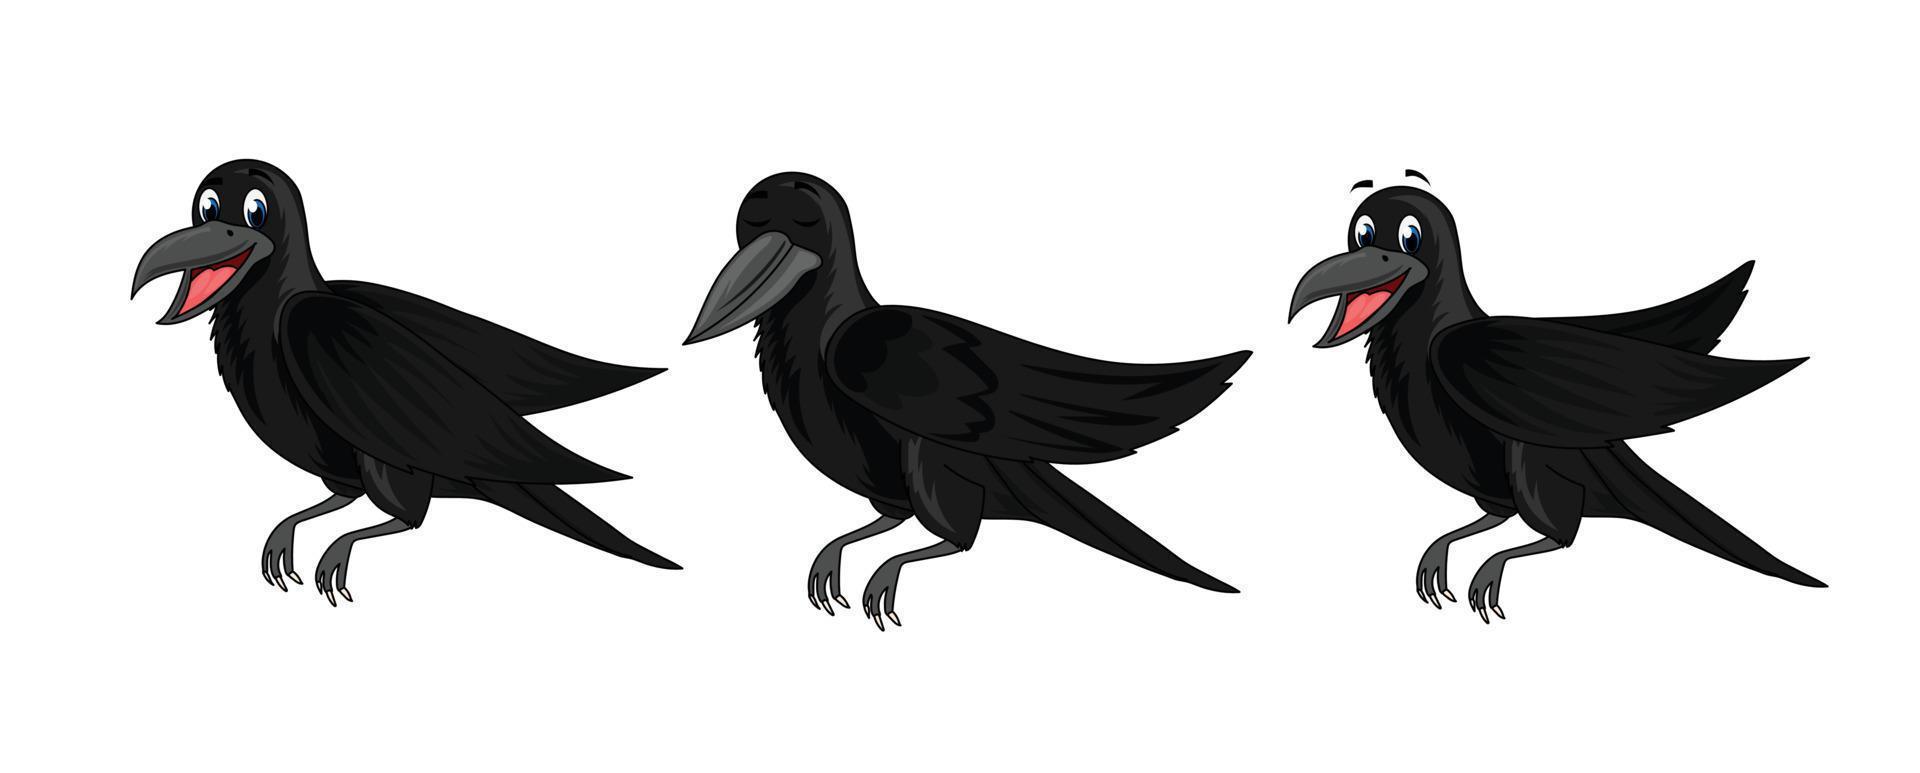 Crow animation poses vector illustration